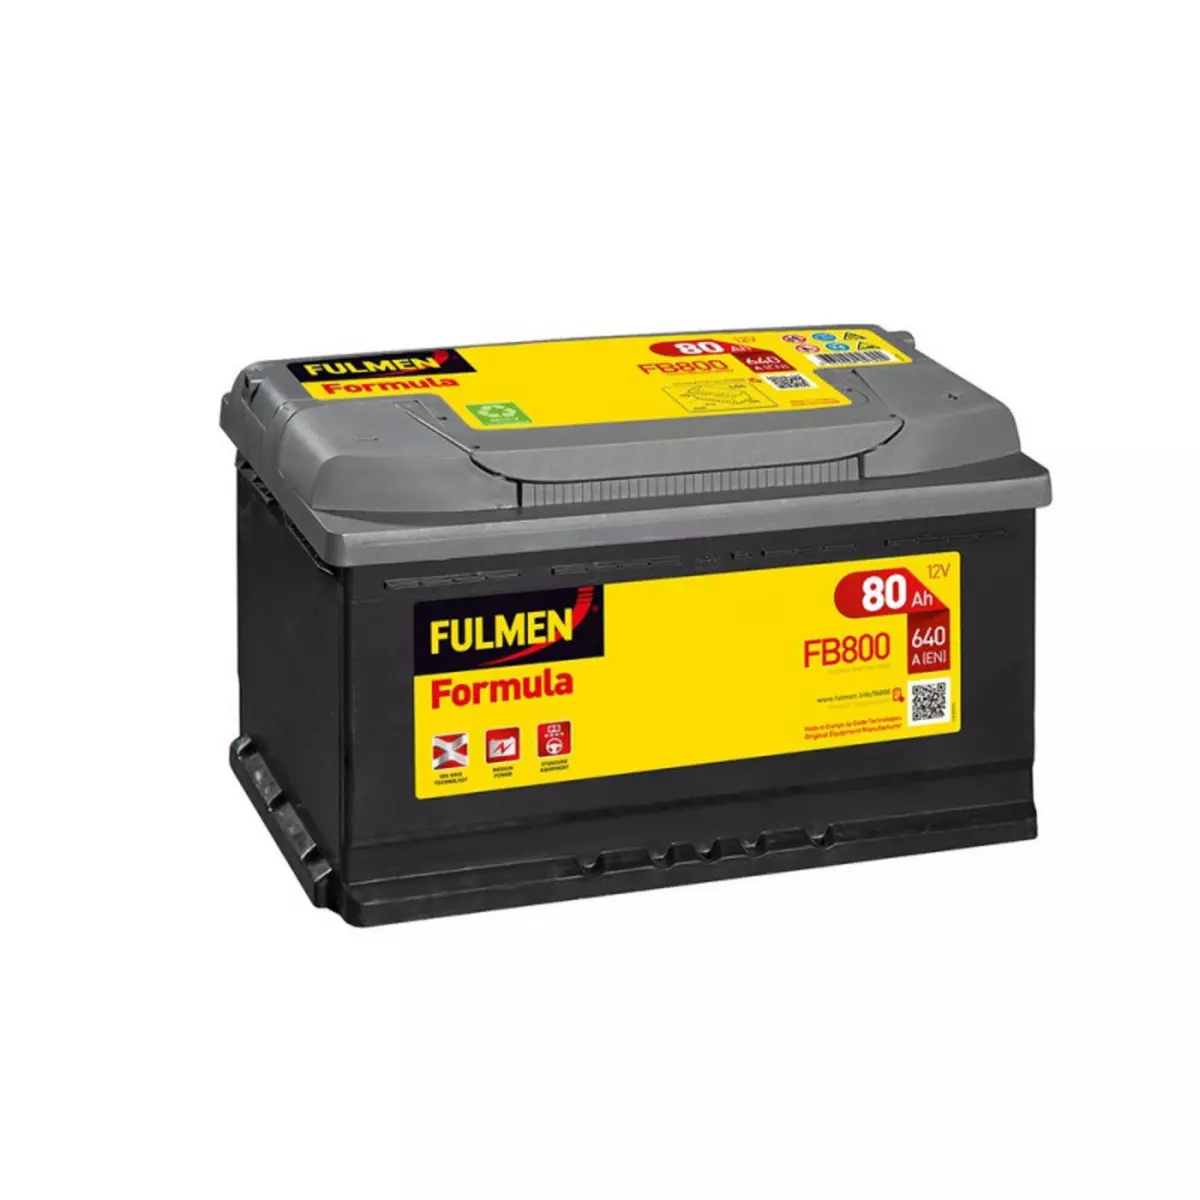 FULMEN Batterie FULMEN Formula FB800 12v 80AH 640A